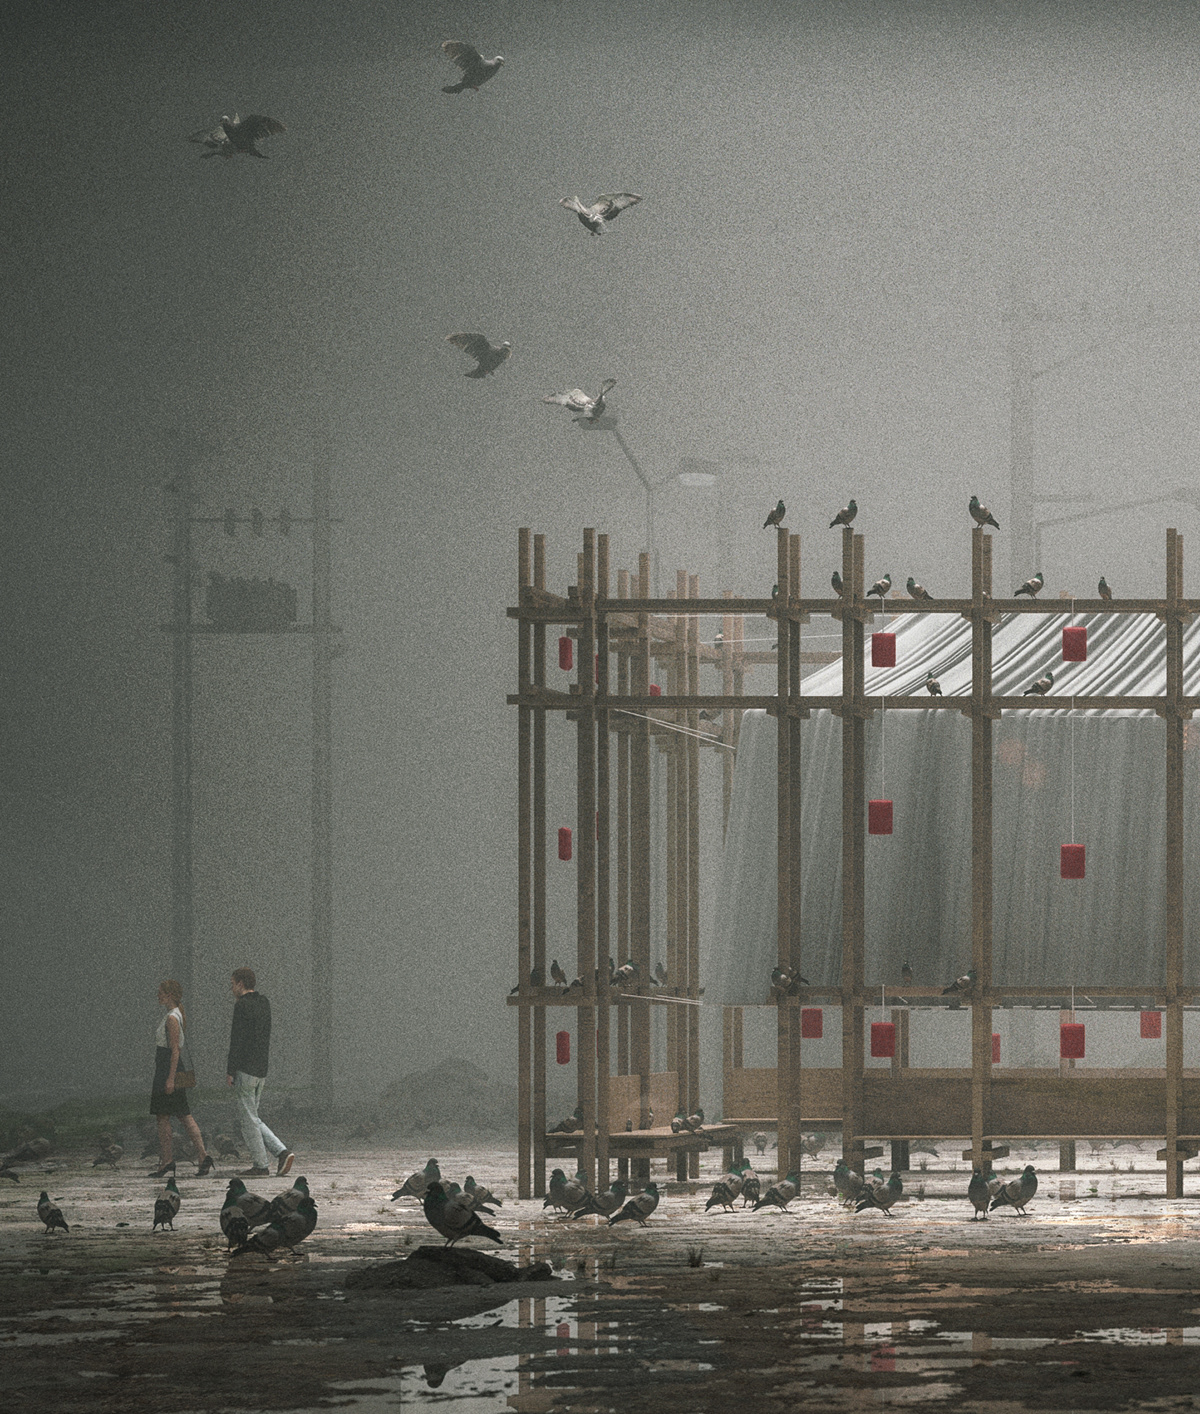 architecture archviz Breakdown Competition Render visualization dove pigeon